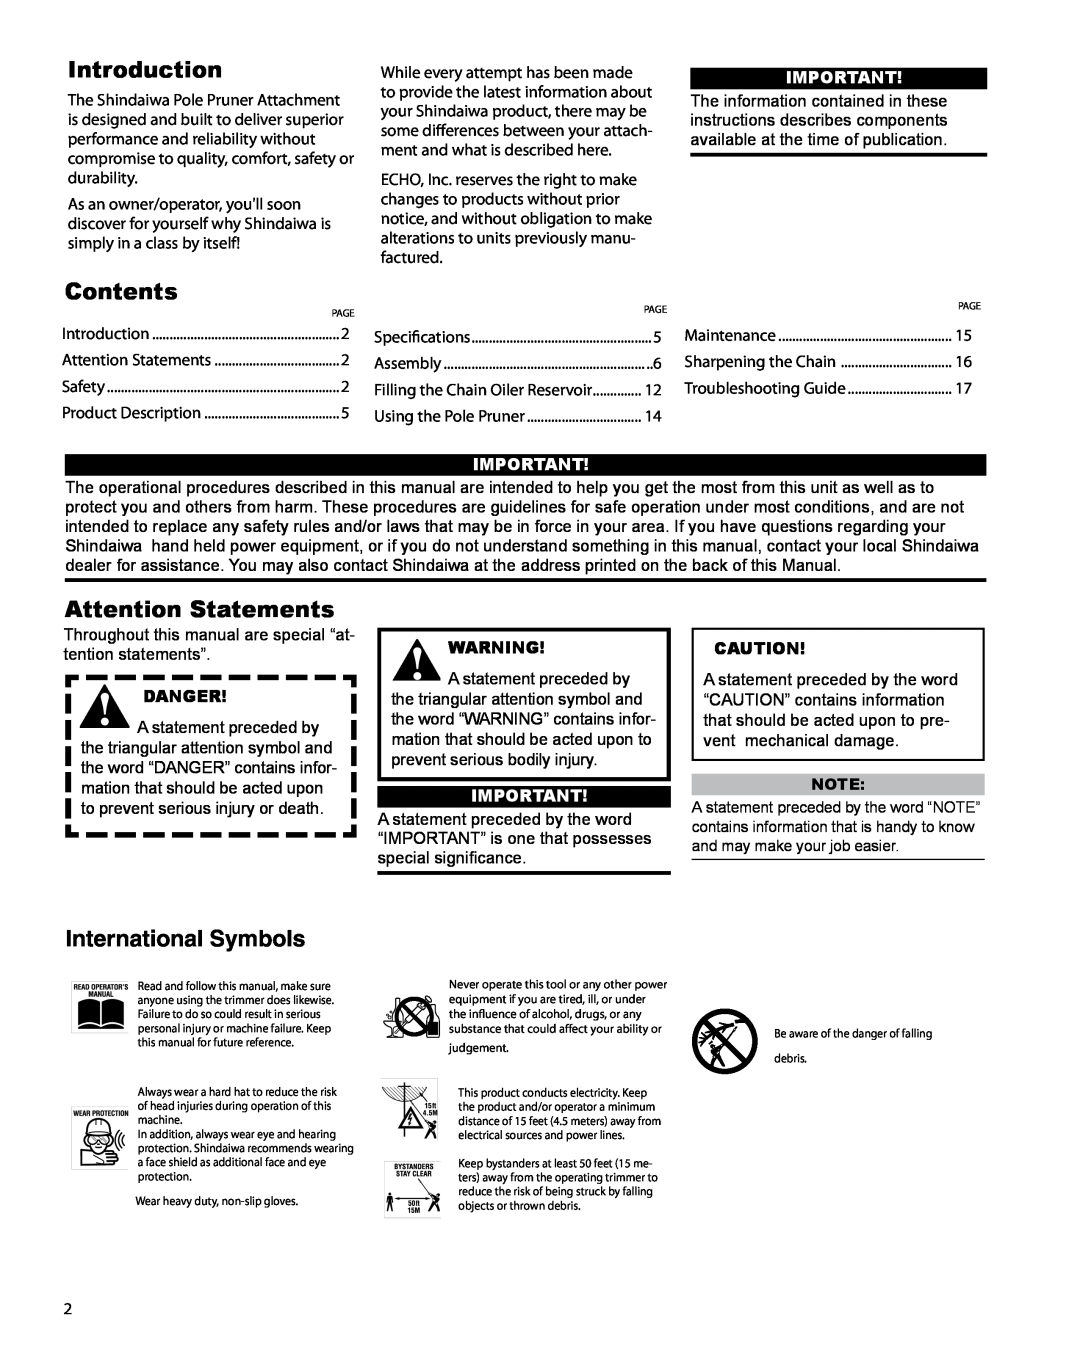 Shindaiwa T230 manual Introduction, Contents, Attention Statements, International Symbols, Danger 